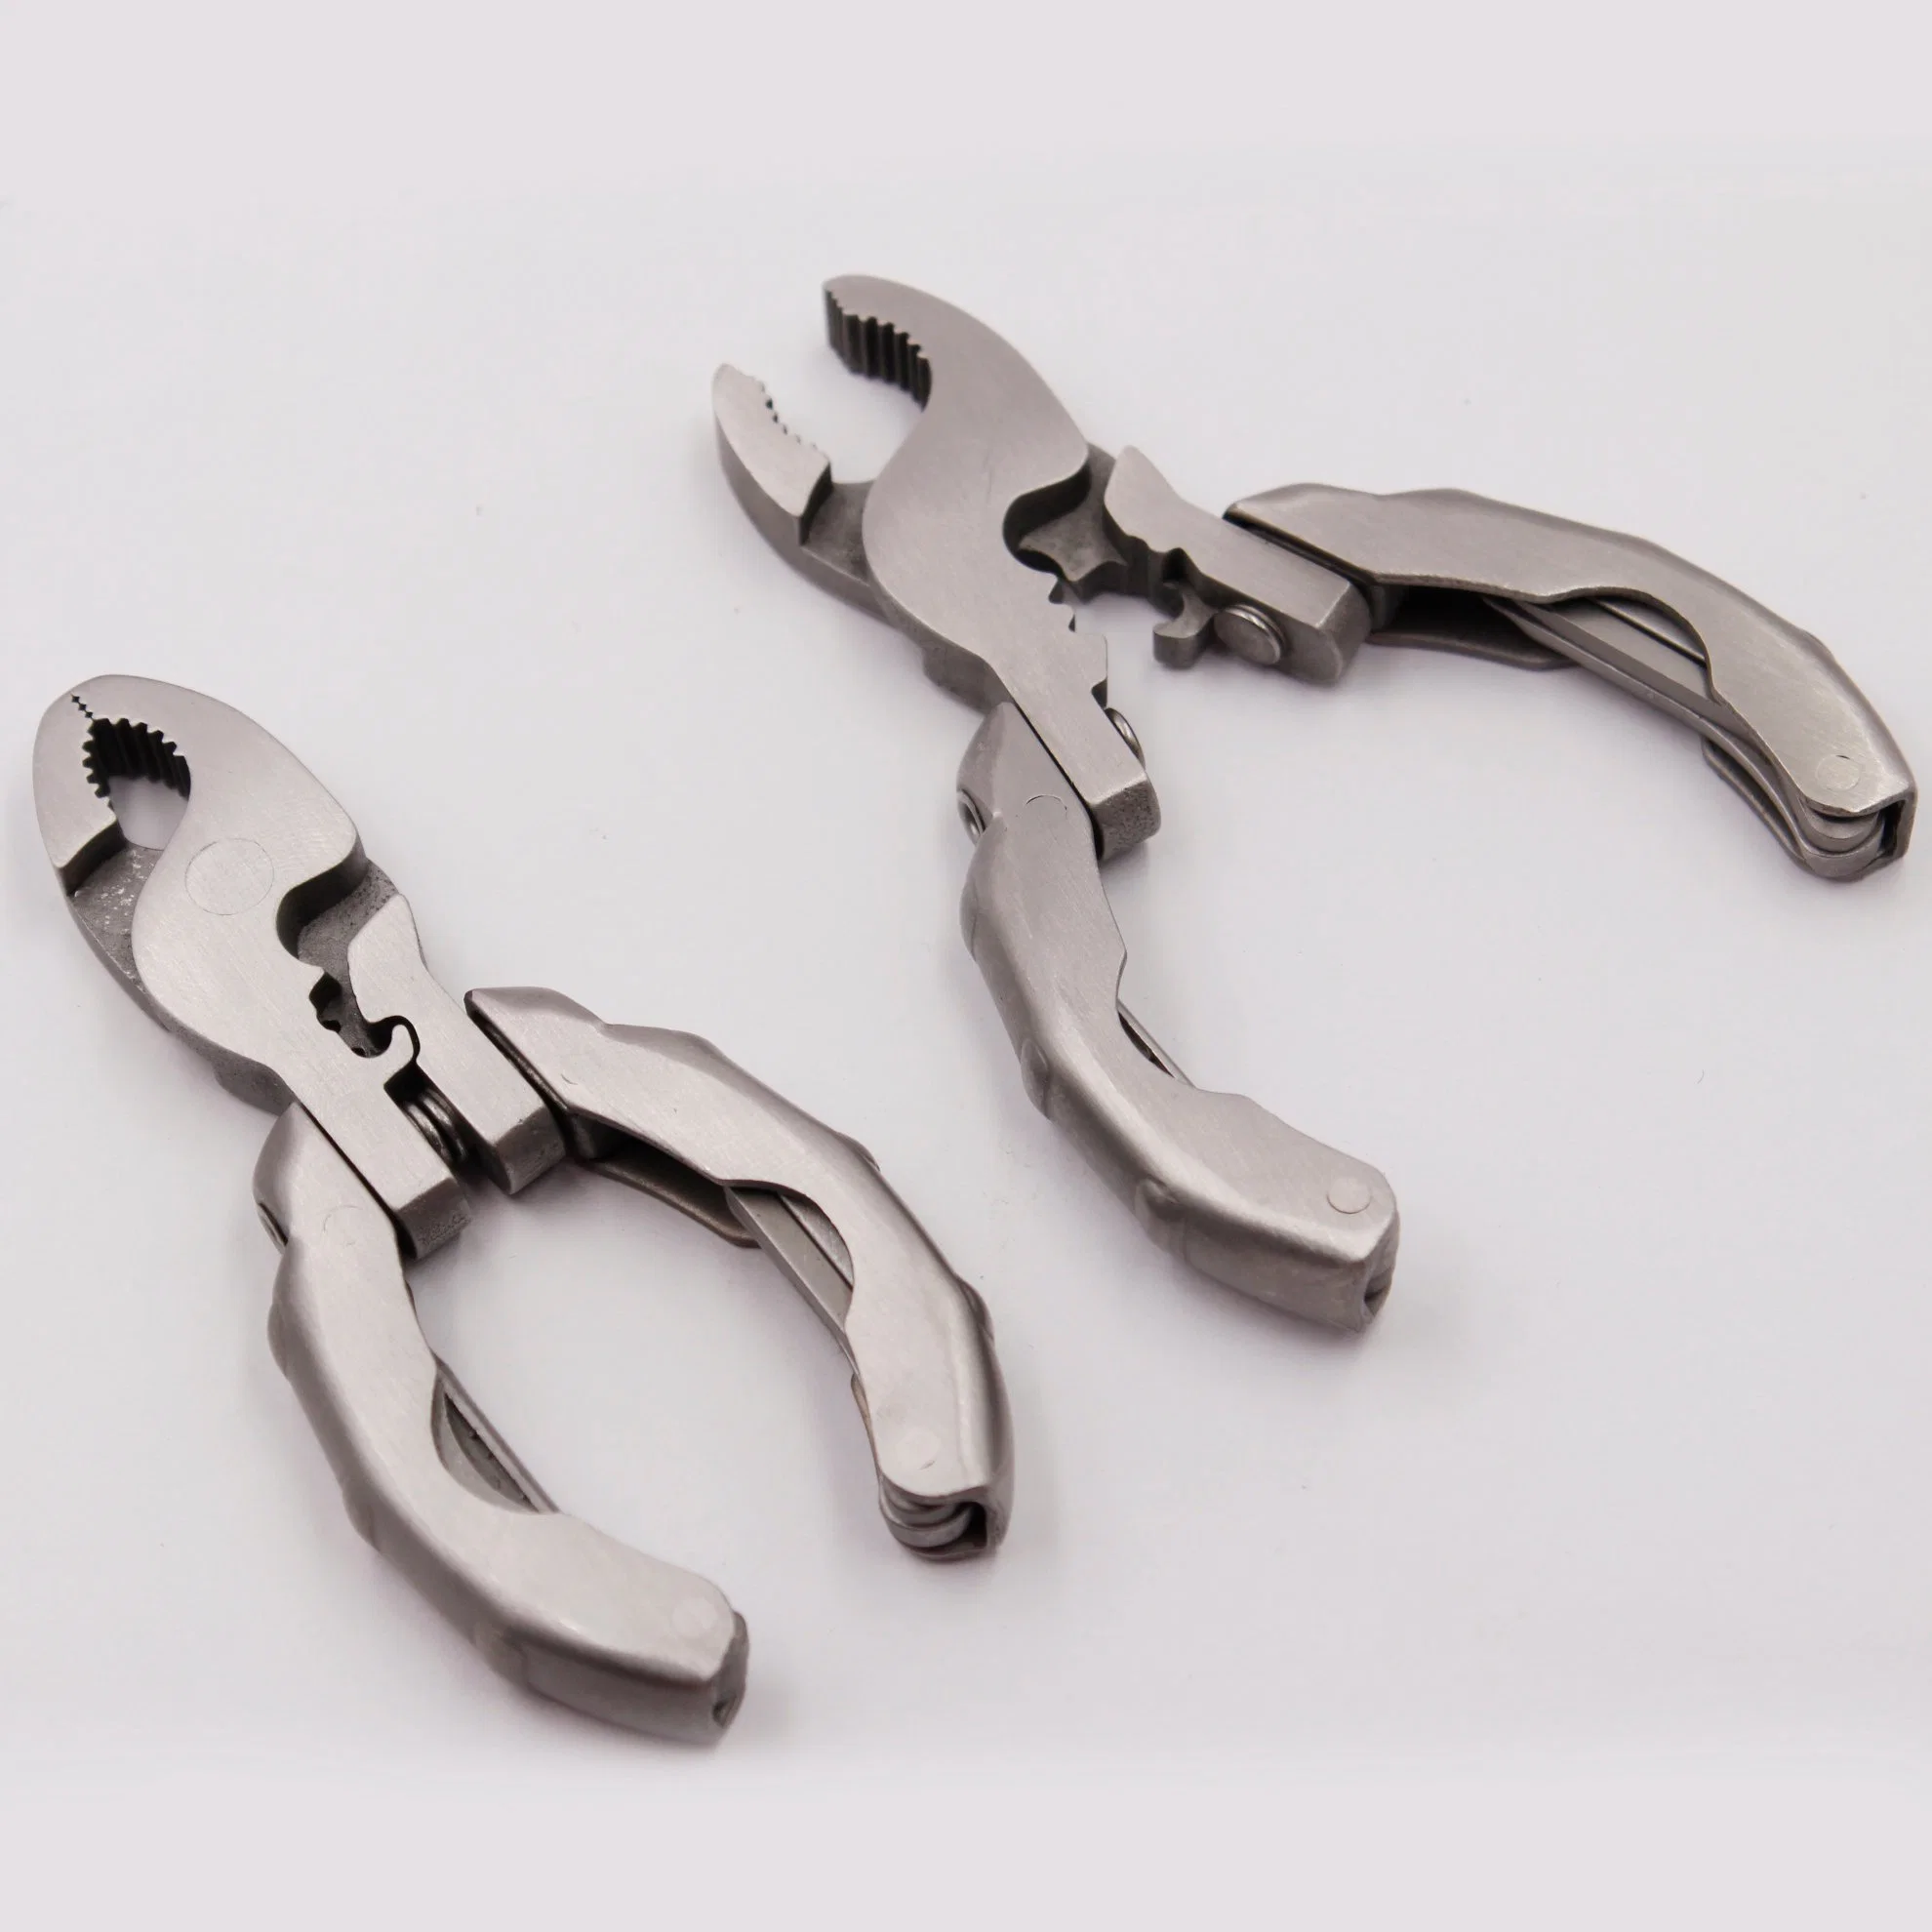 9 in 1 Stainless Steel Screwdriver Folding Tool Turtle Pliers